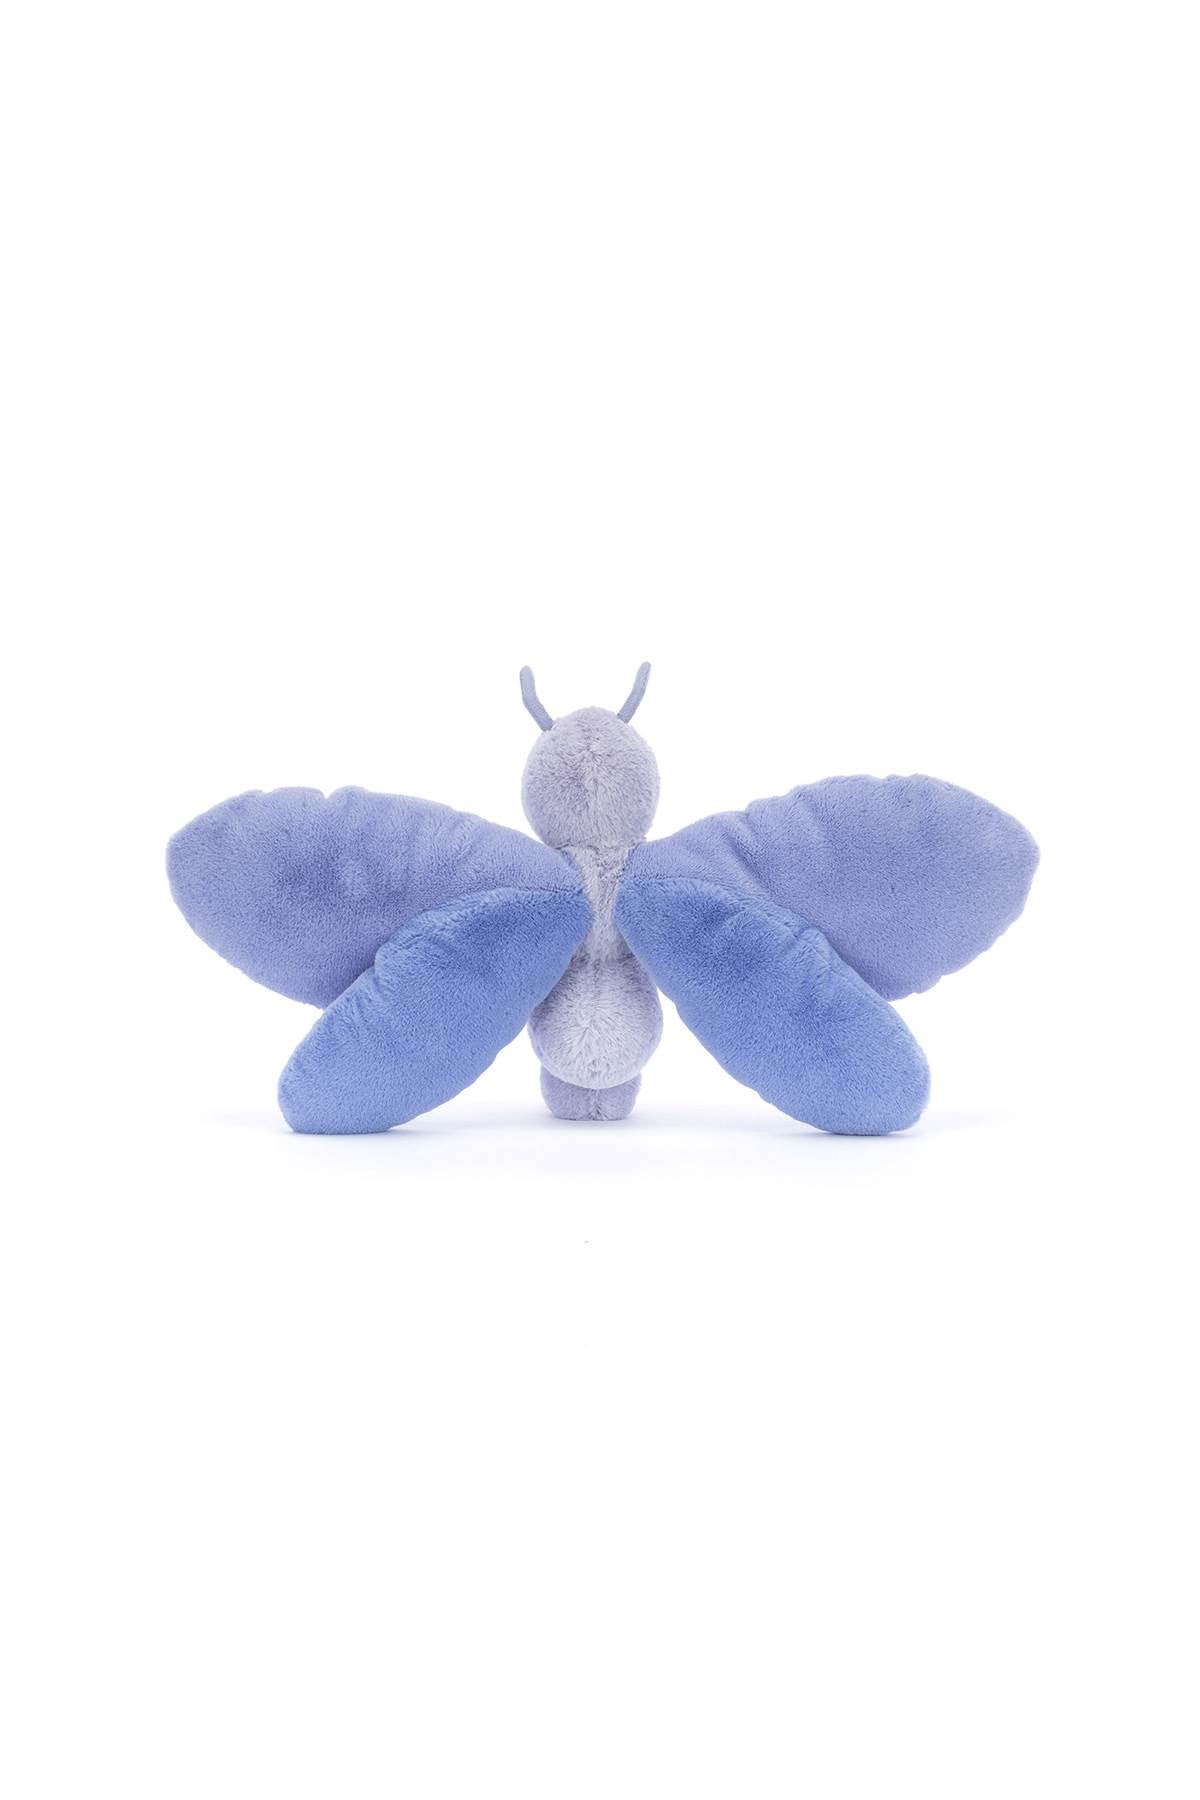 plush bluebell butterfly-2